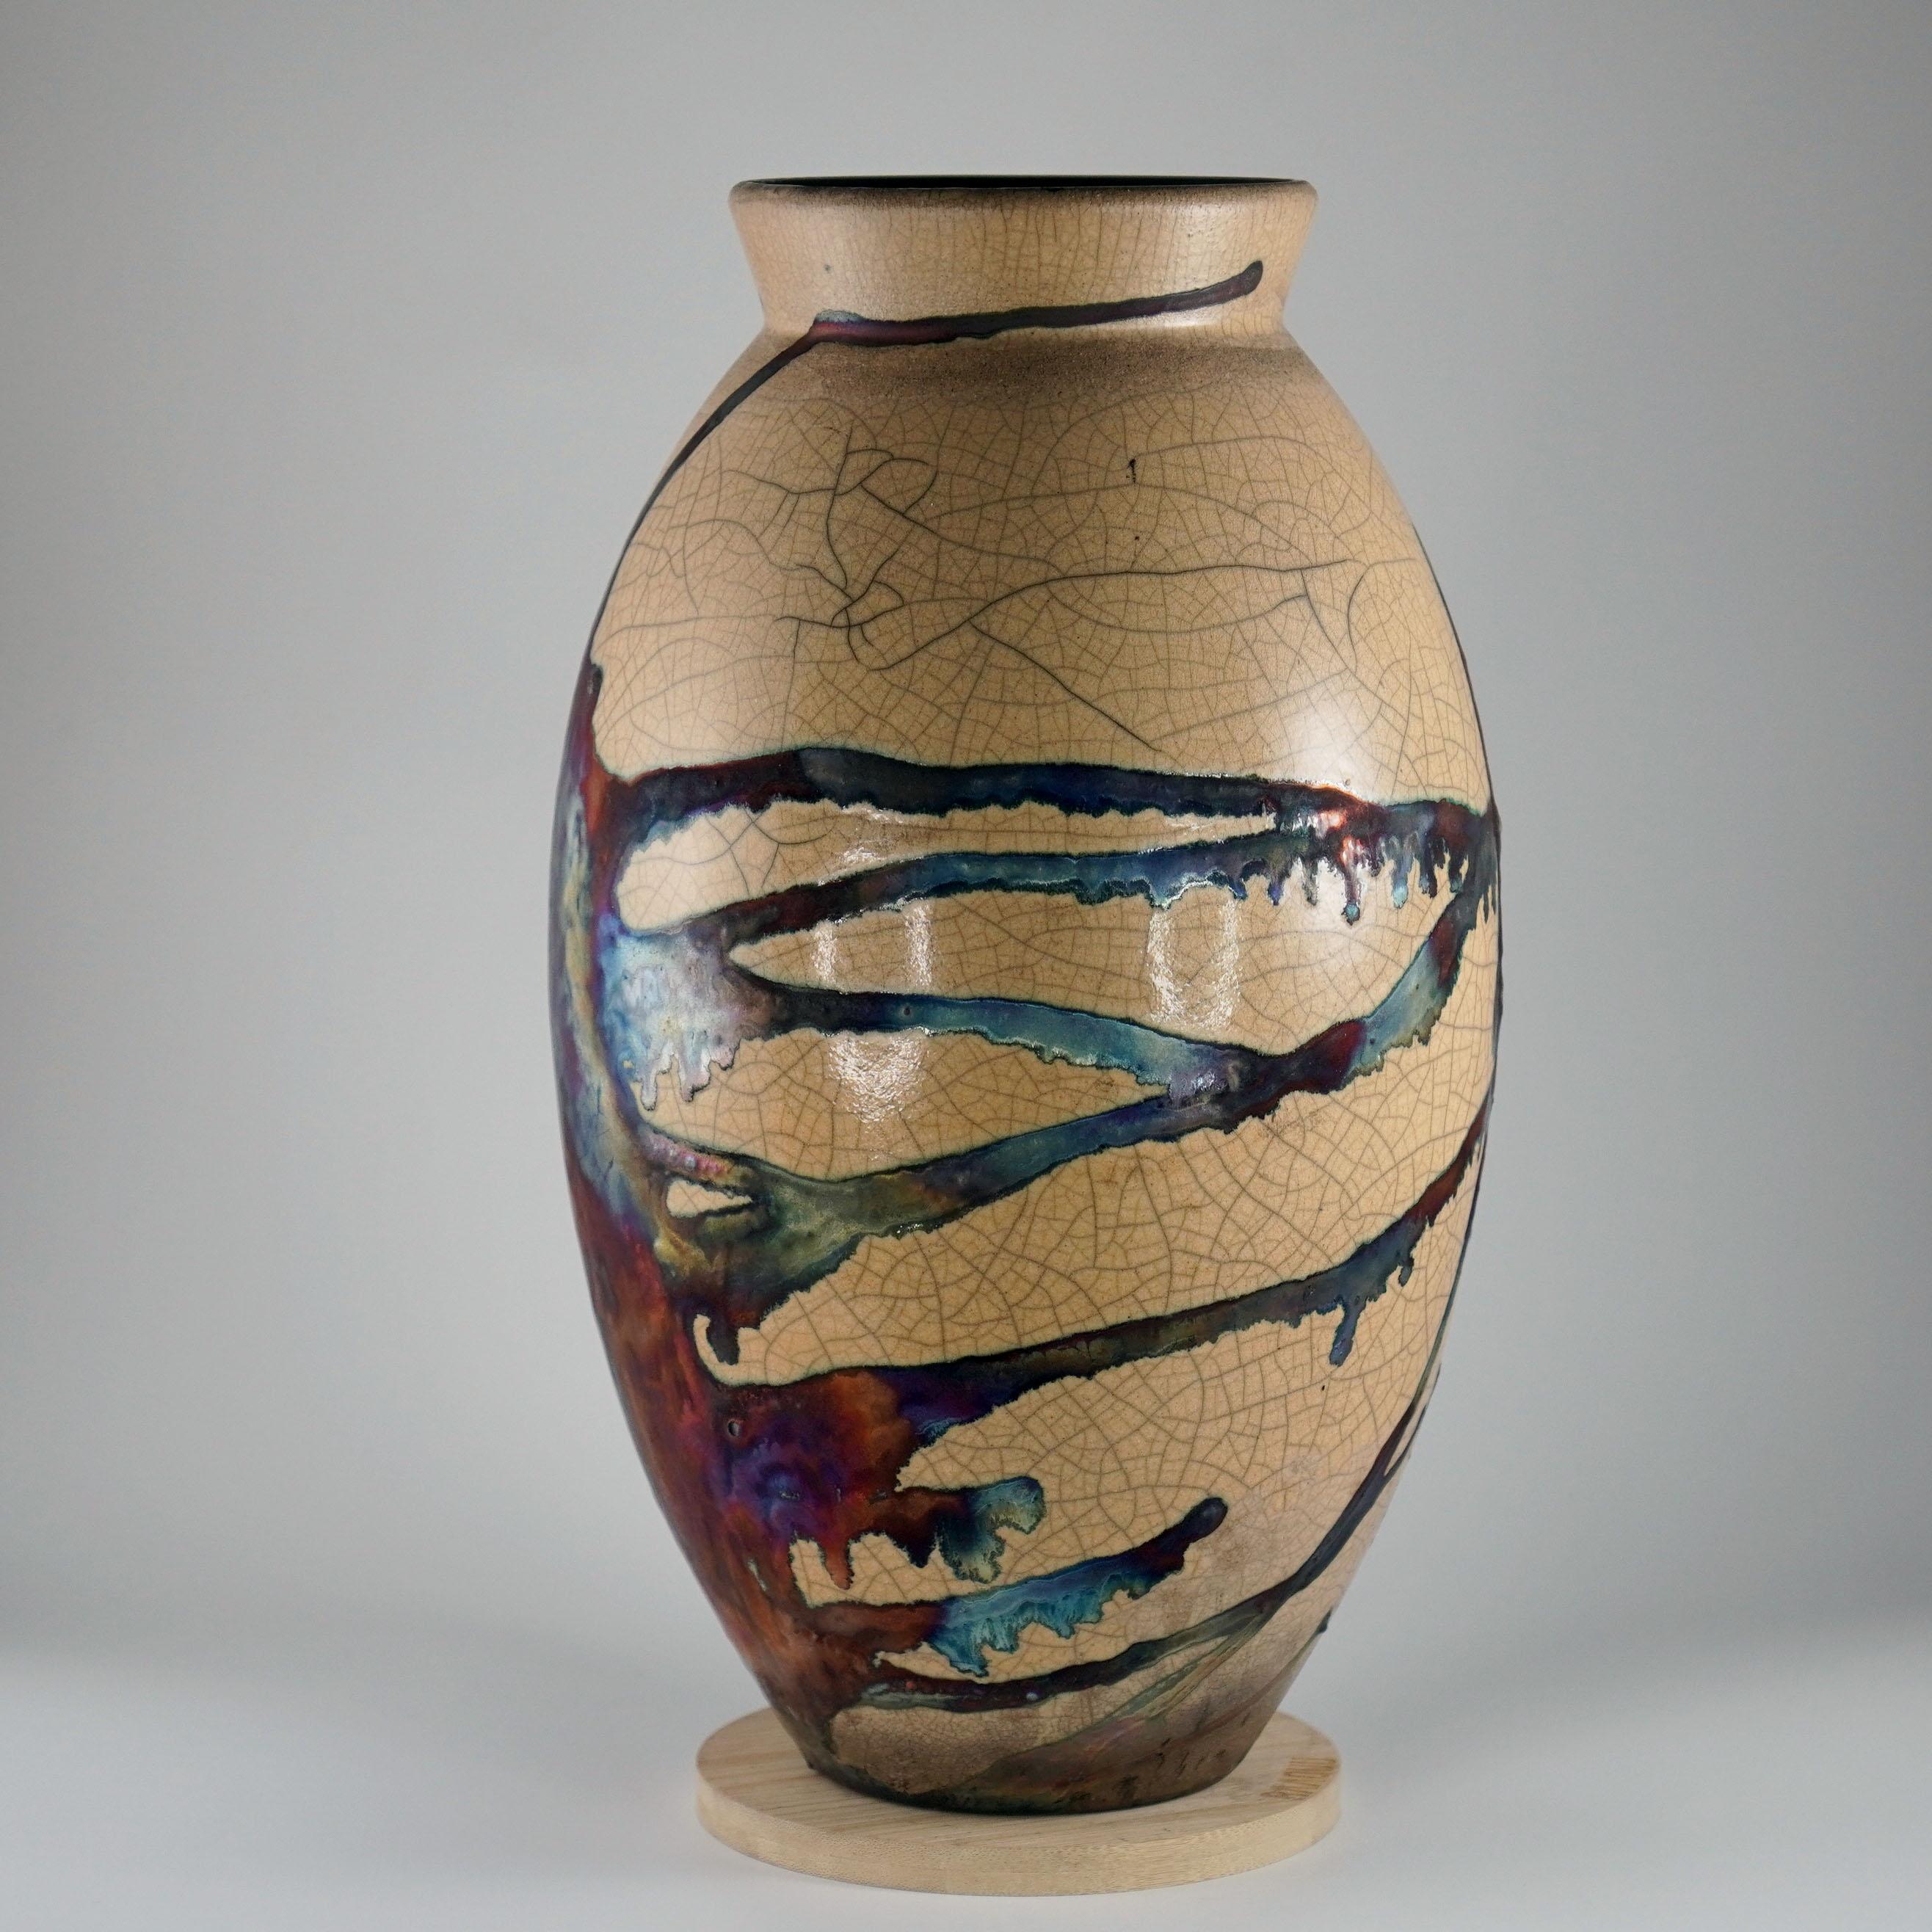 Raaquu Raku Große ovale Vase, geflammt, S/N0000092 Tafelaufsatz, Kunstserie (Gebrannt)